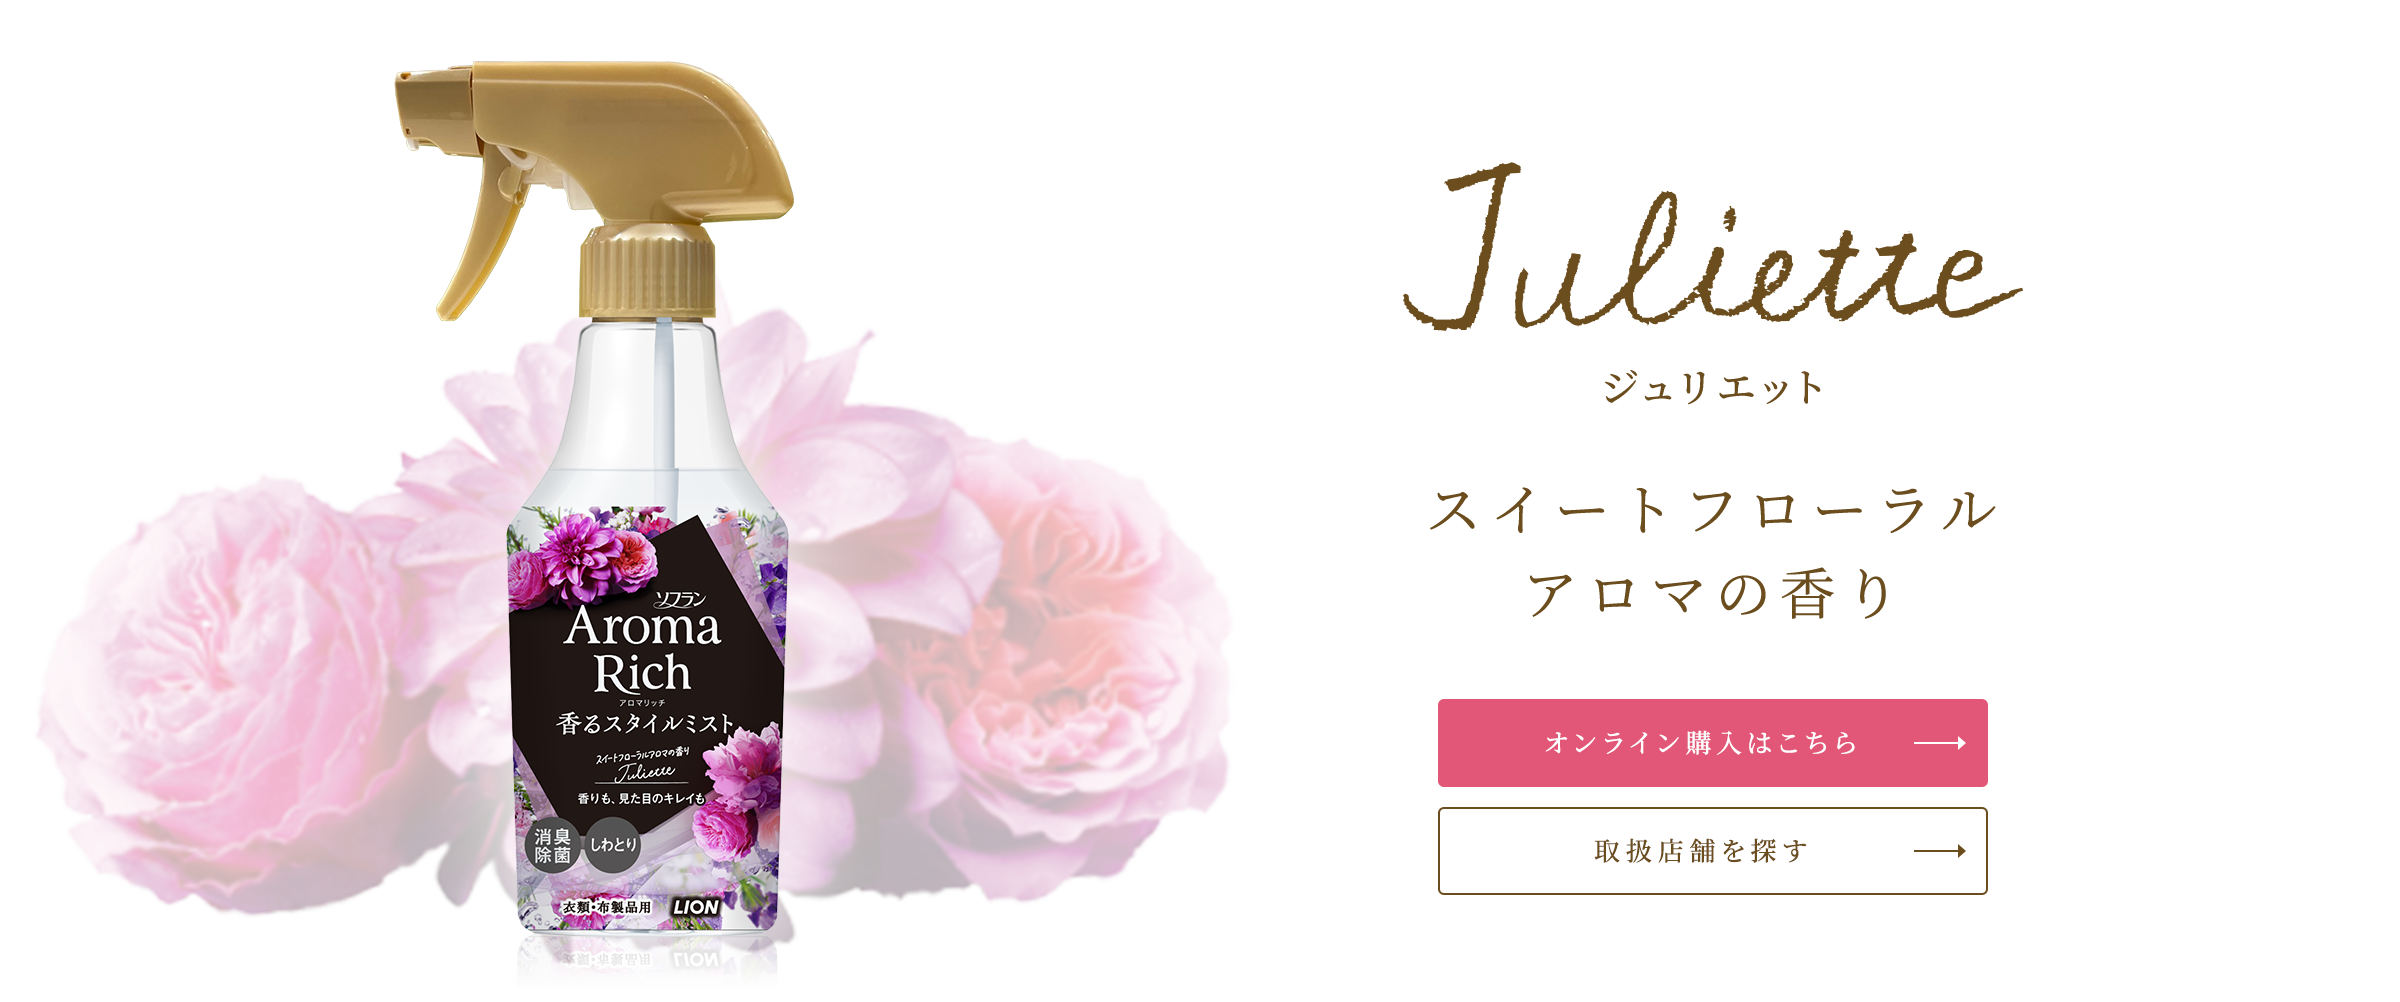 Julietteの香り ジュリエット スイートフローラルアロマの香り